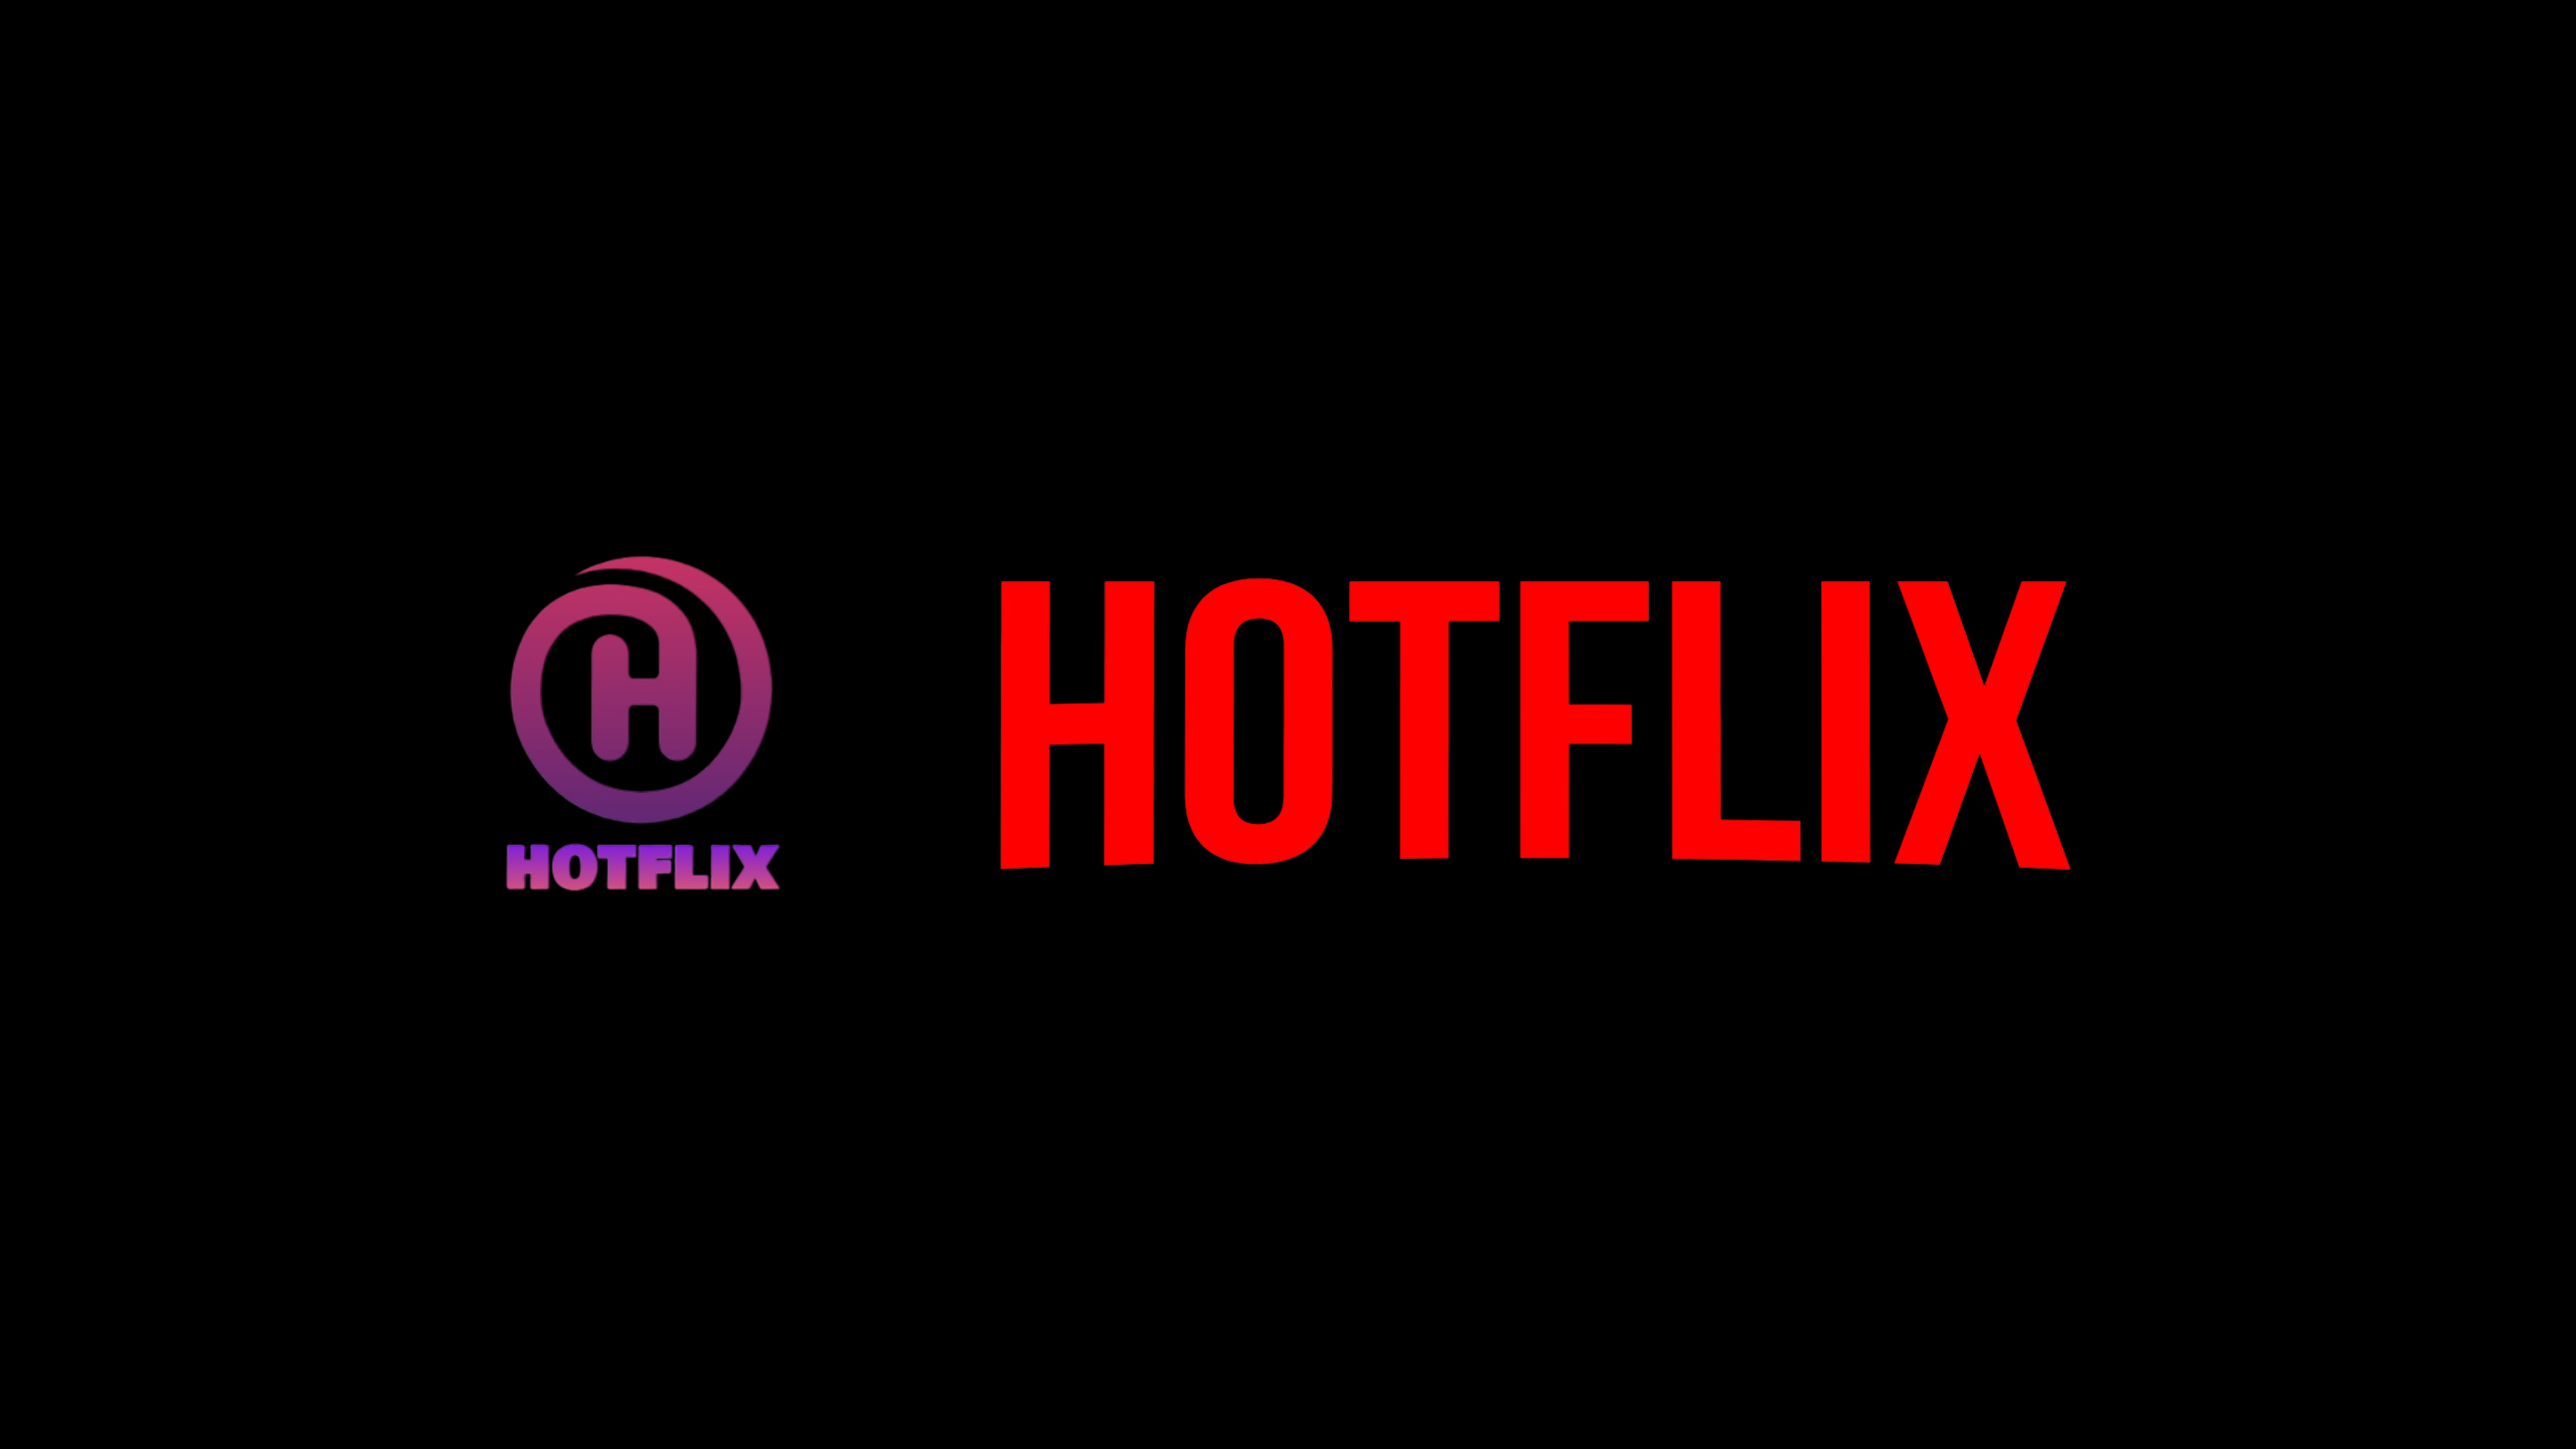 Hotflix webseries